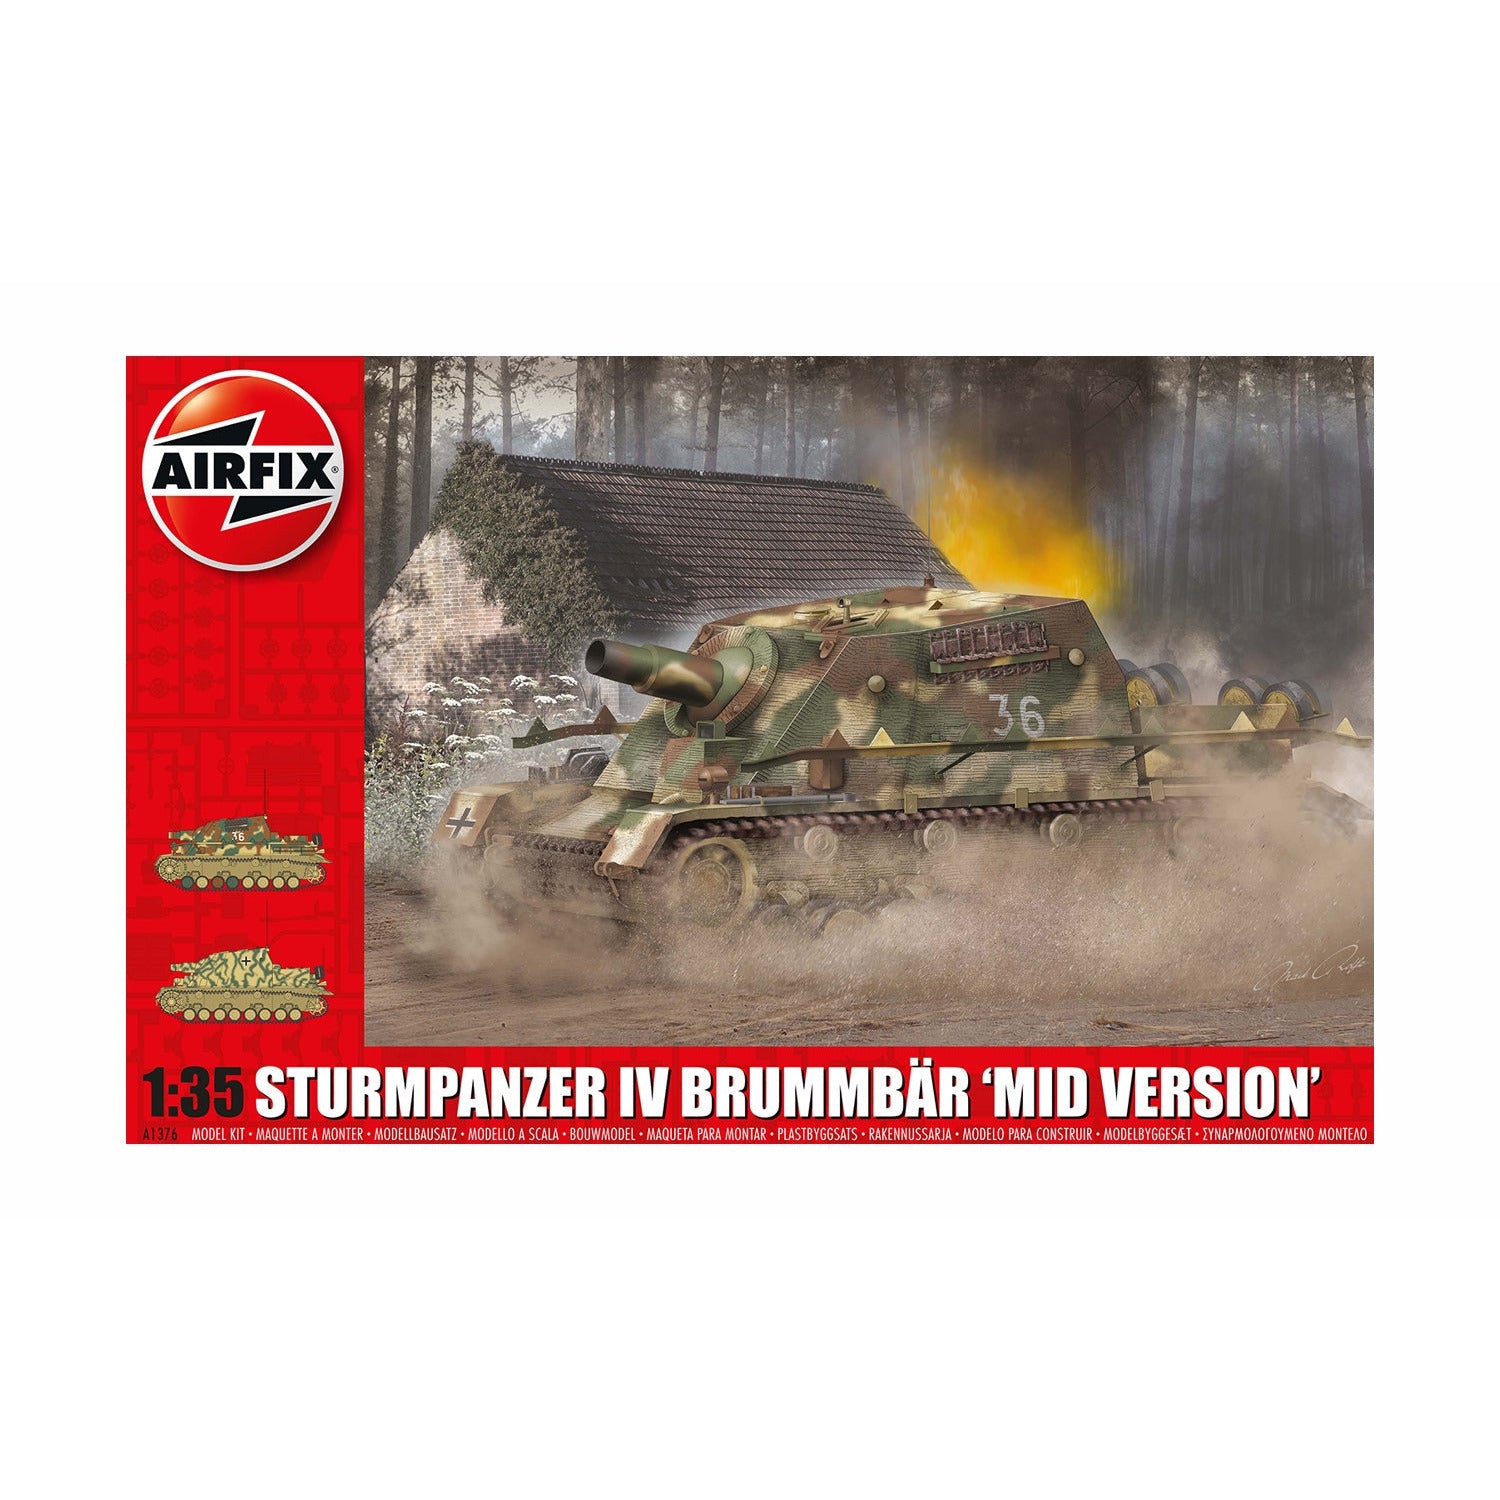 Sturmpanzer IV Brummbär 'Mid Version' 1/35 #01376 by Airfix